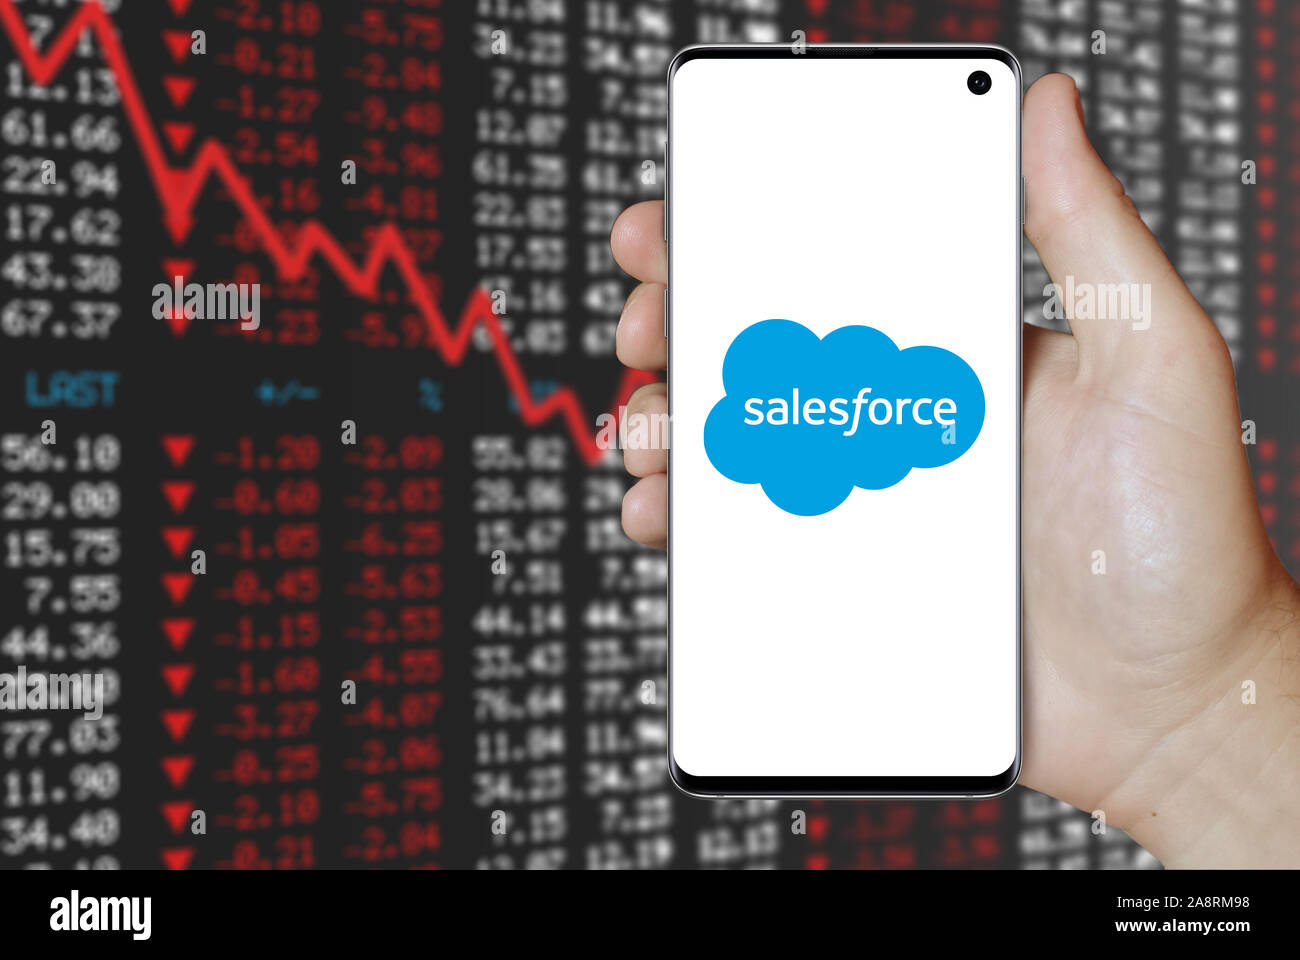 Logo of public company Salesforce displayed on a smartphone. Negative stock market background. Credit: PIXDUCE Stock Photo